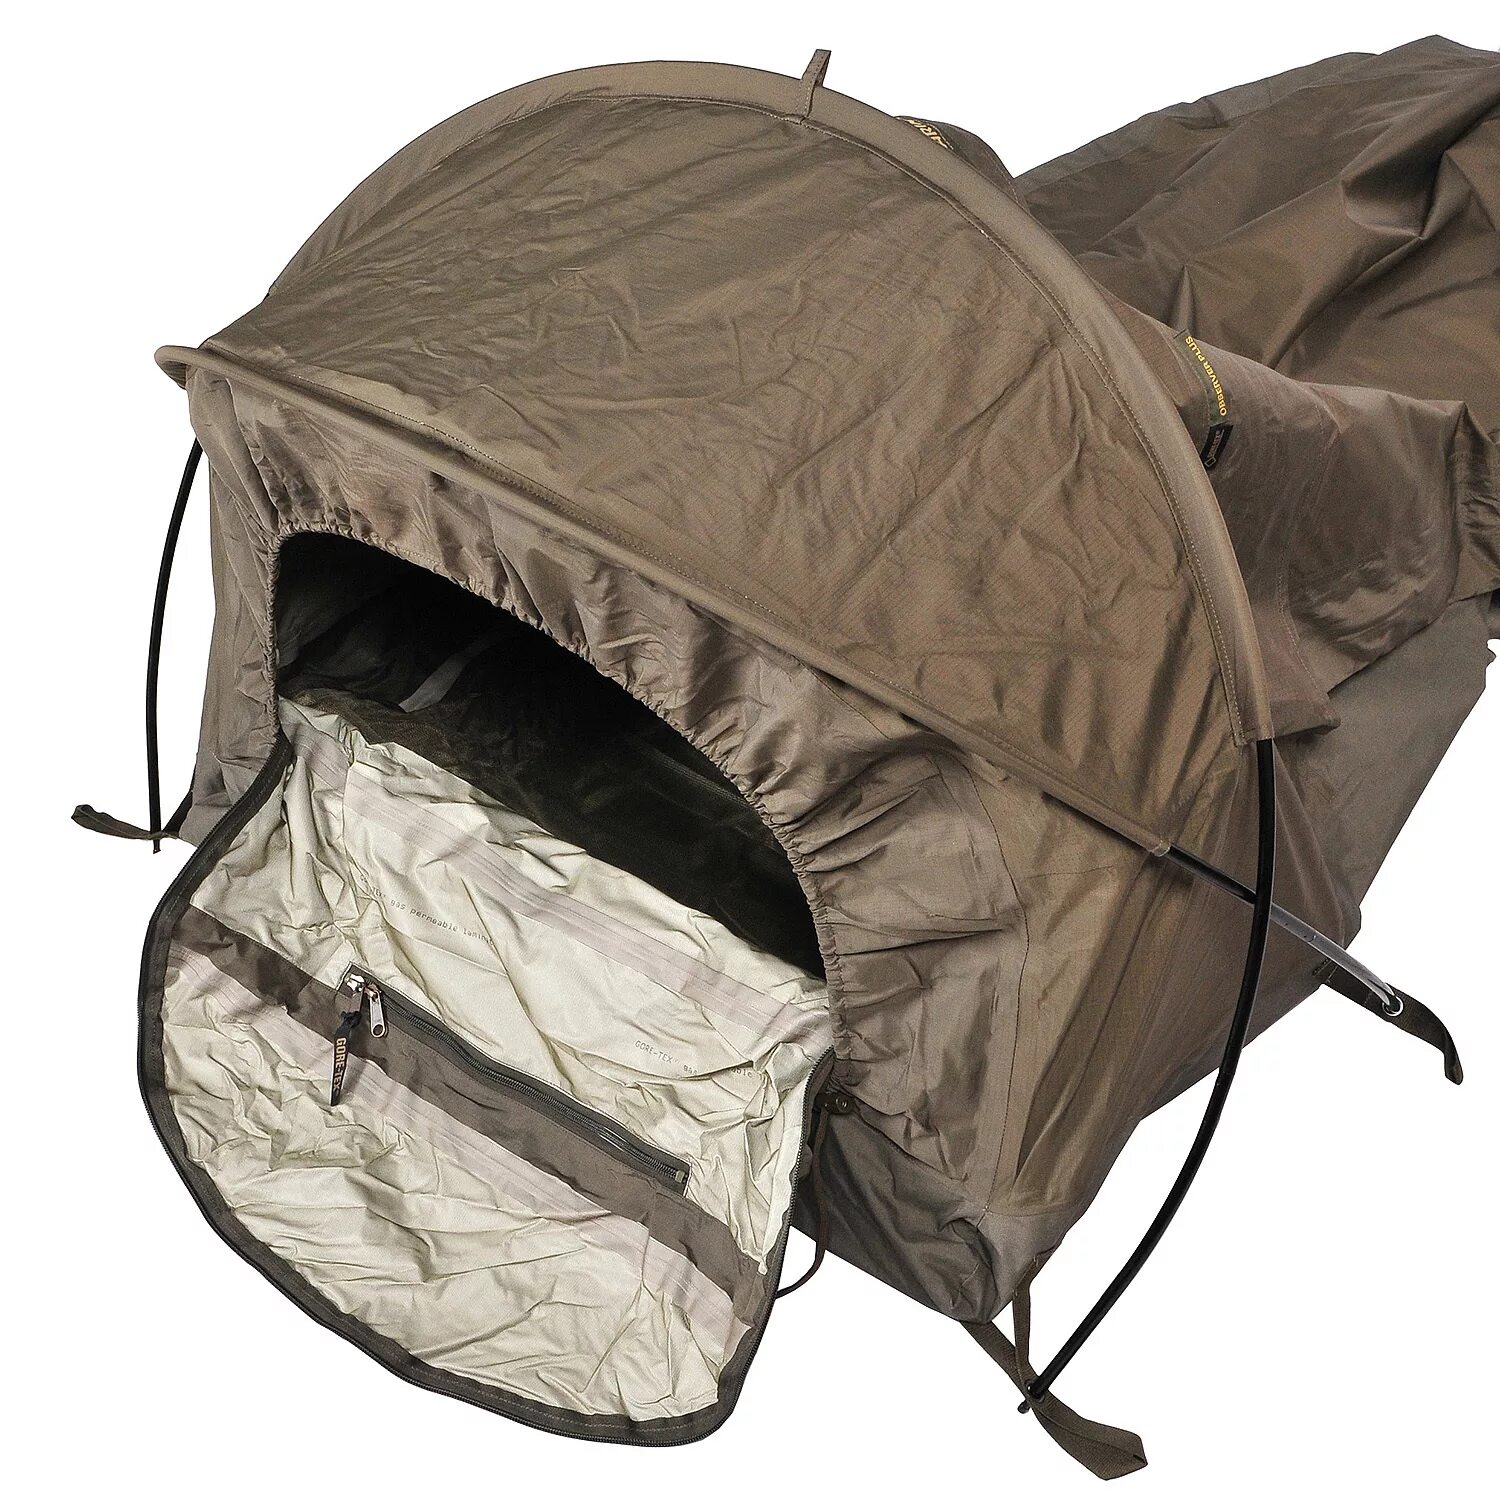 Спальный мешок палатка купить. Палатка Carinthia Observer Plus. Бивачный мешок Carinthia. Спальный мешок палатка Carinthia. Палатка тактическая Carinthia Observer Plus.